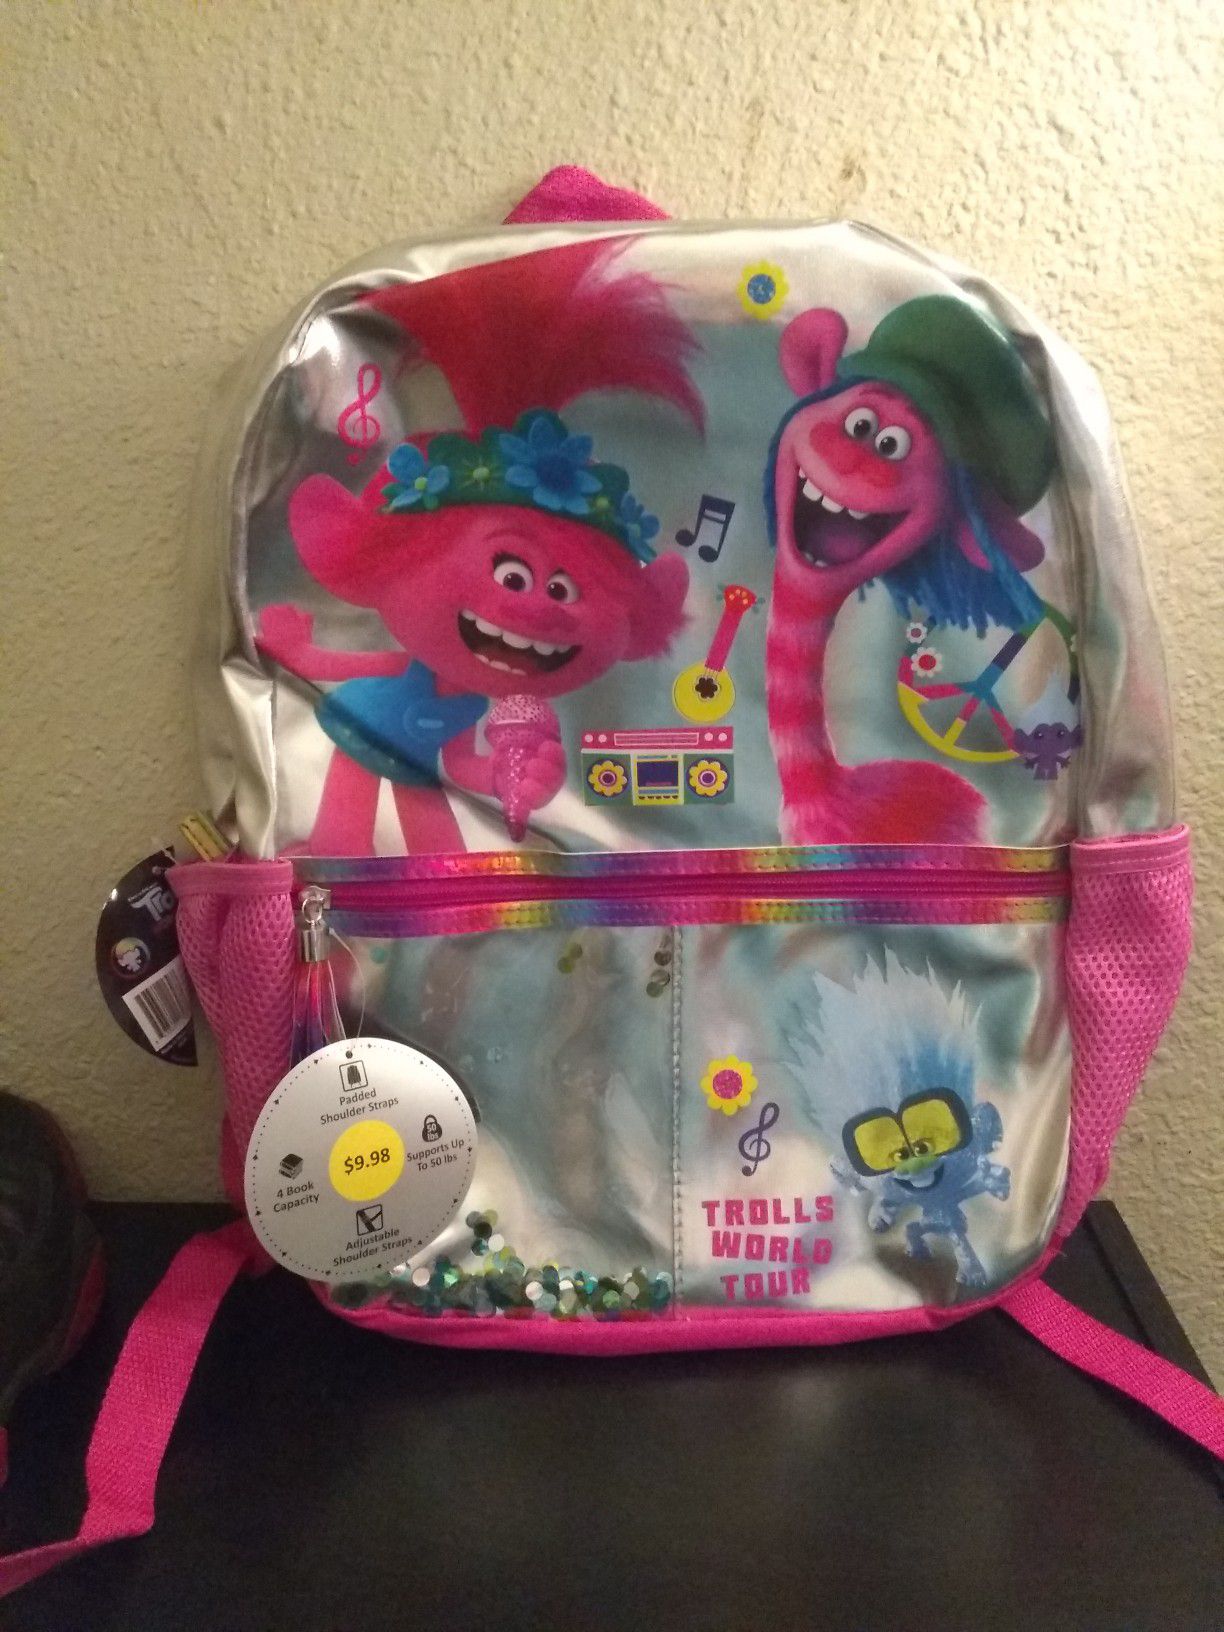 Trolls (Princess Poppy) Backpack